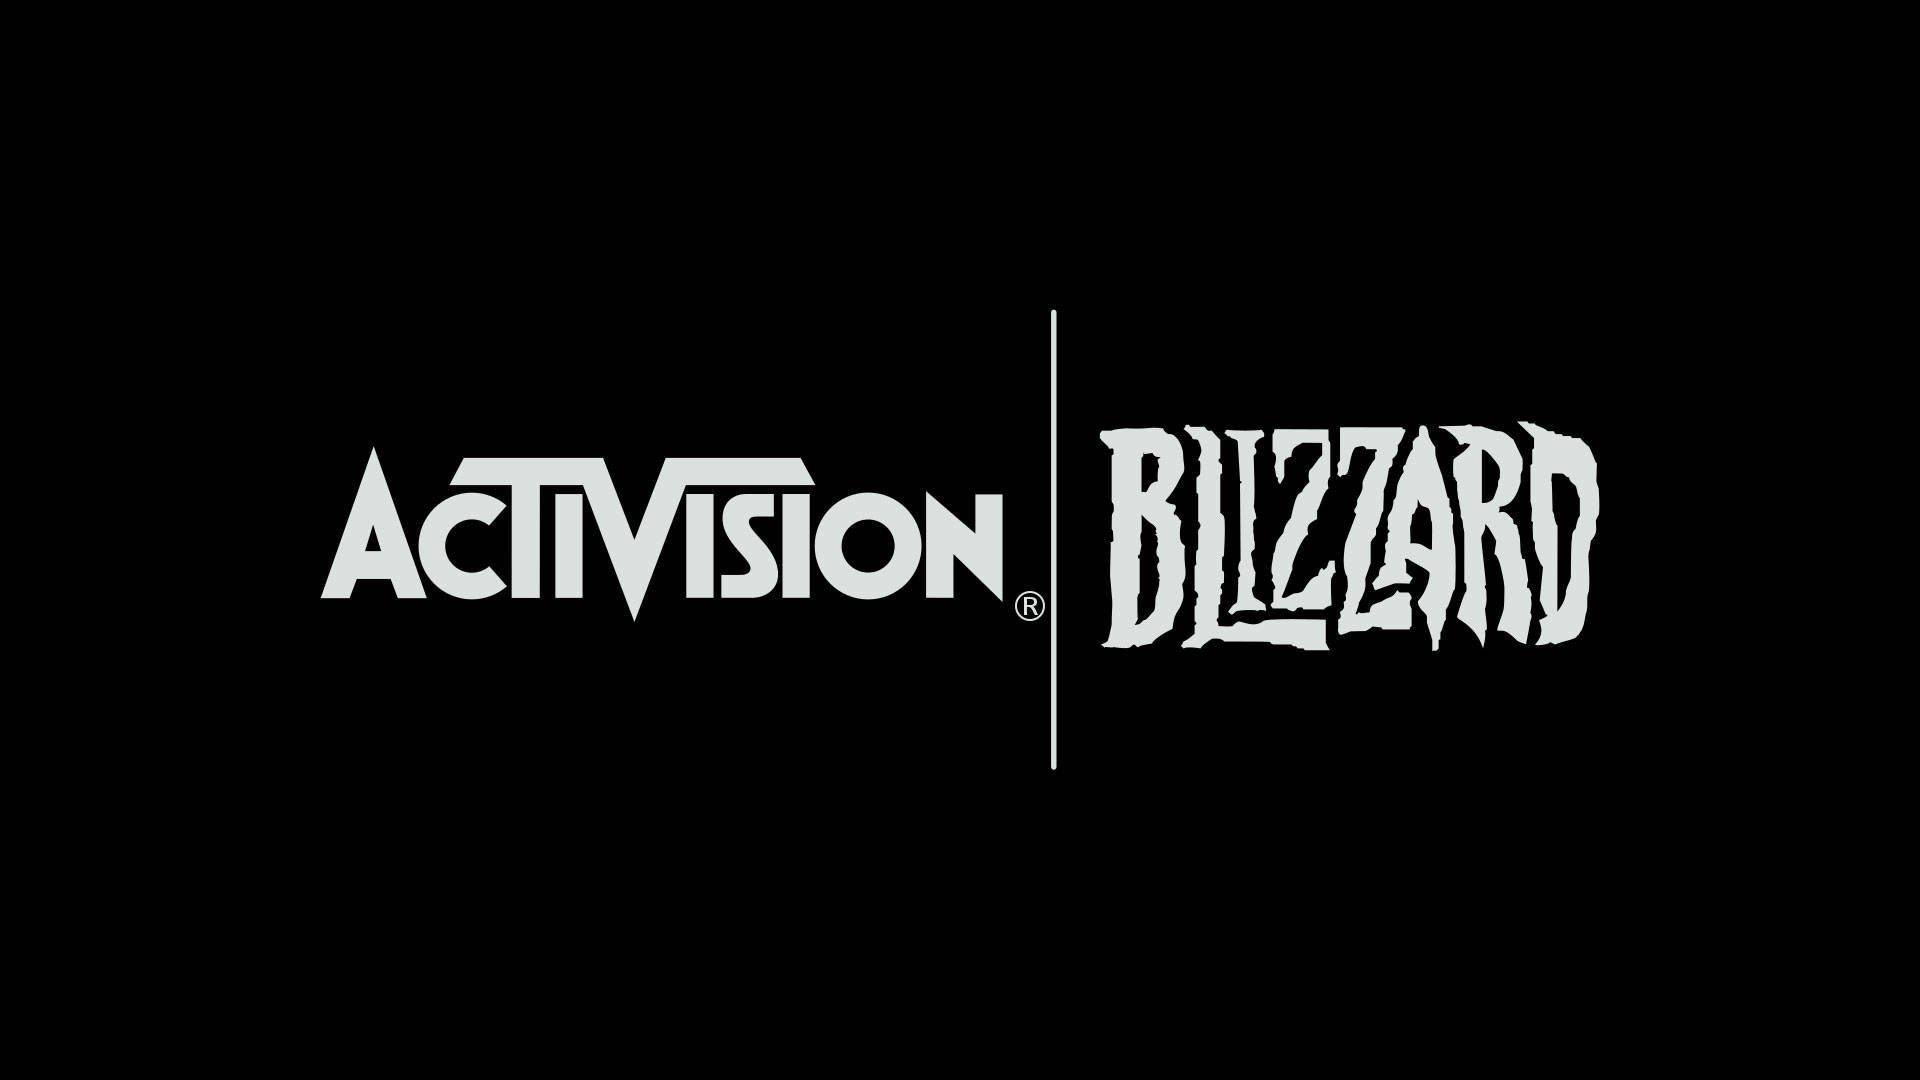 Activision Blizzard даст оплачиваемые отгулы участникам забастовки против харассмента